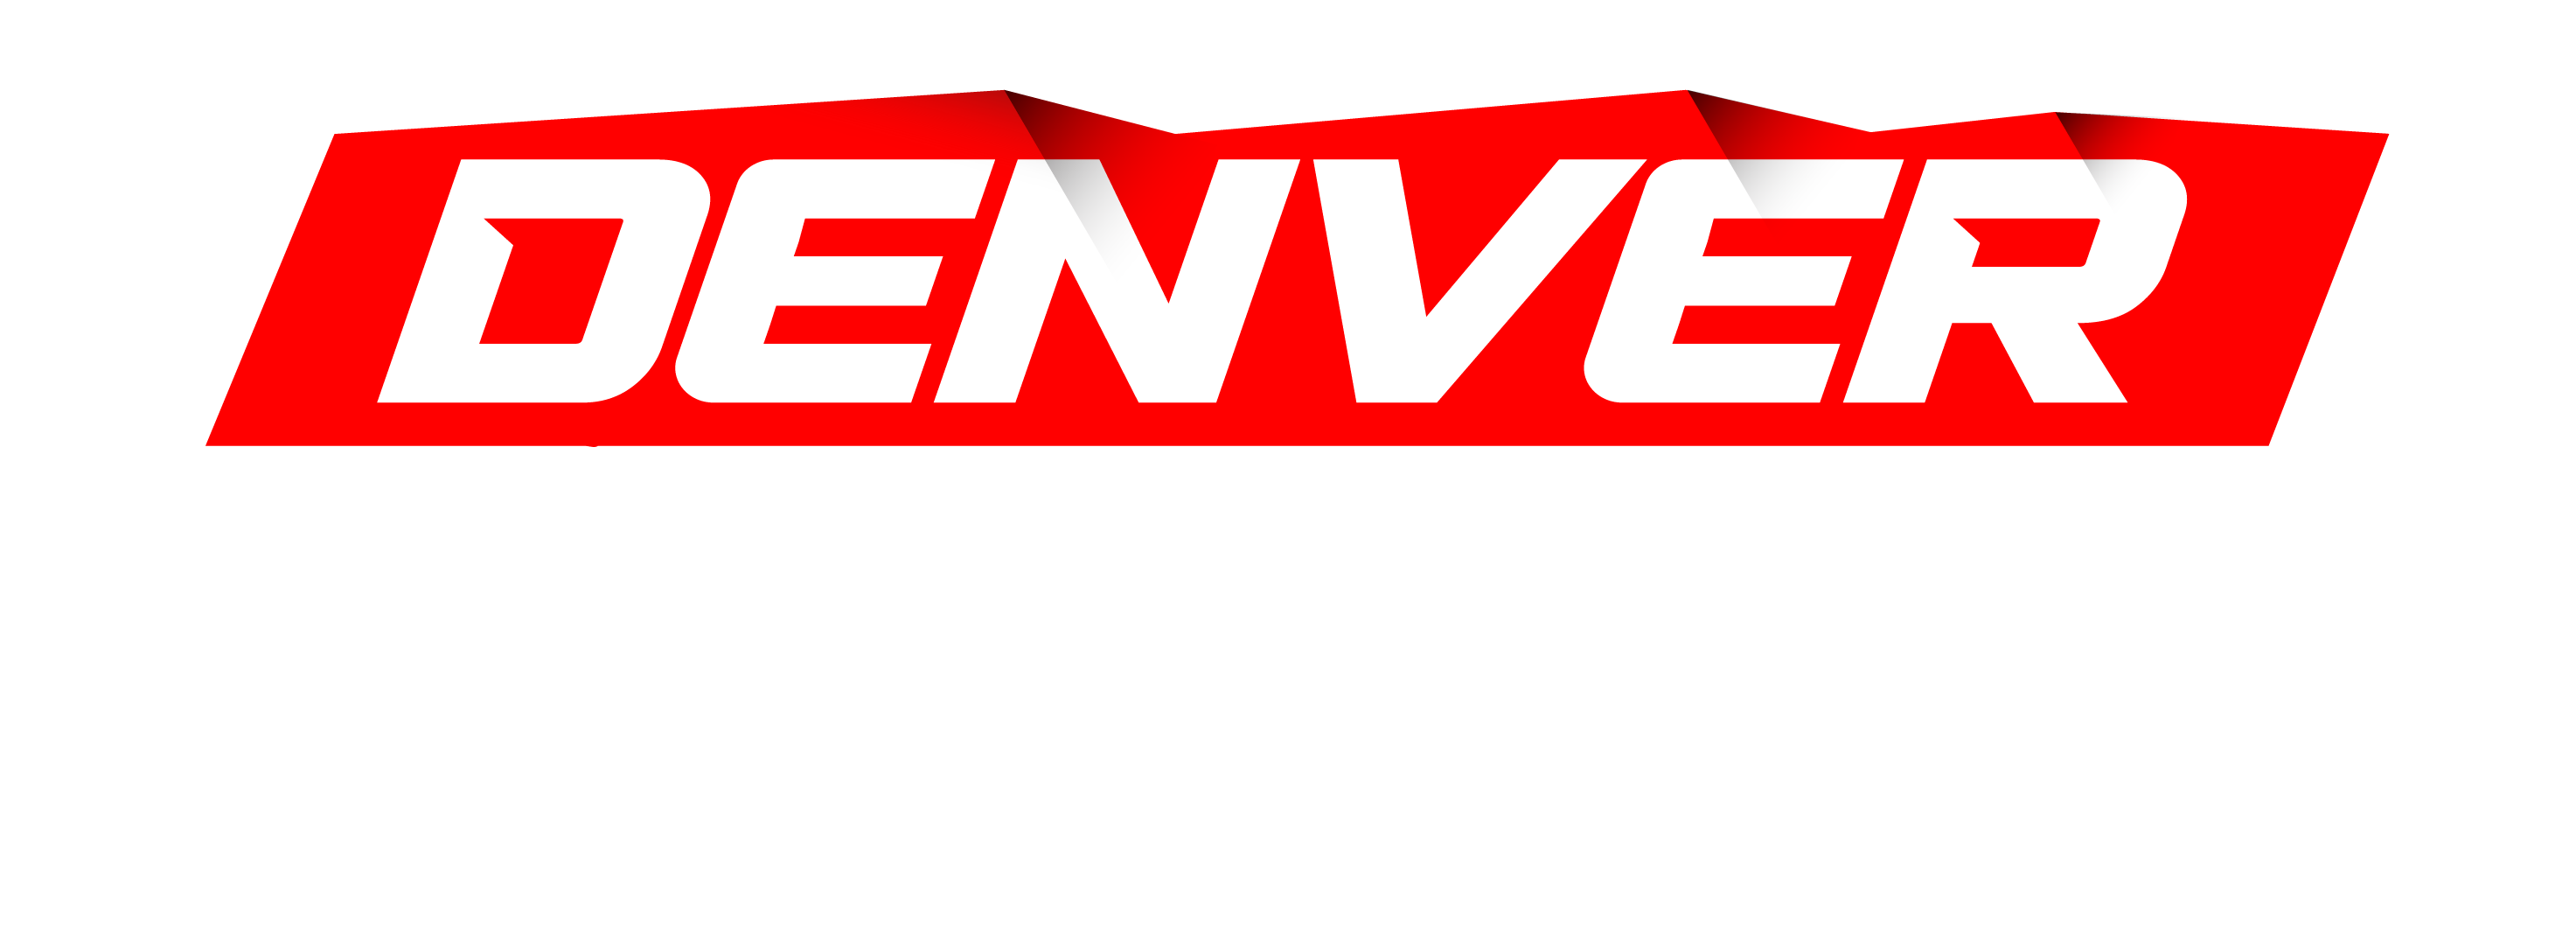 Denver Sports Fan Header Logo